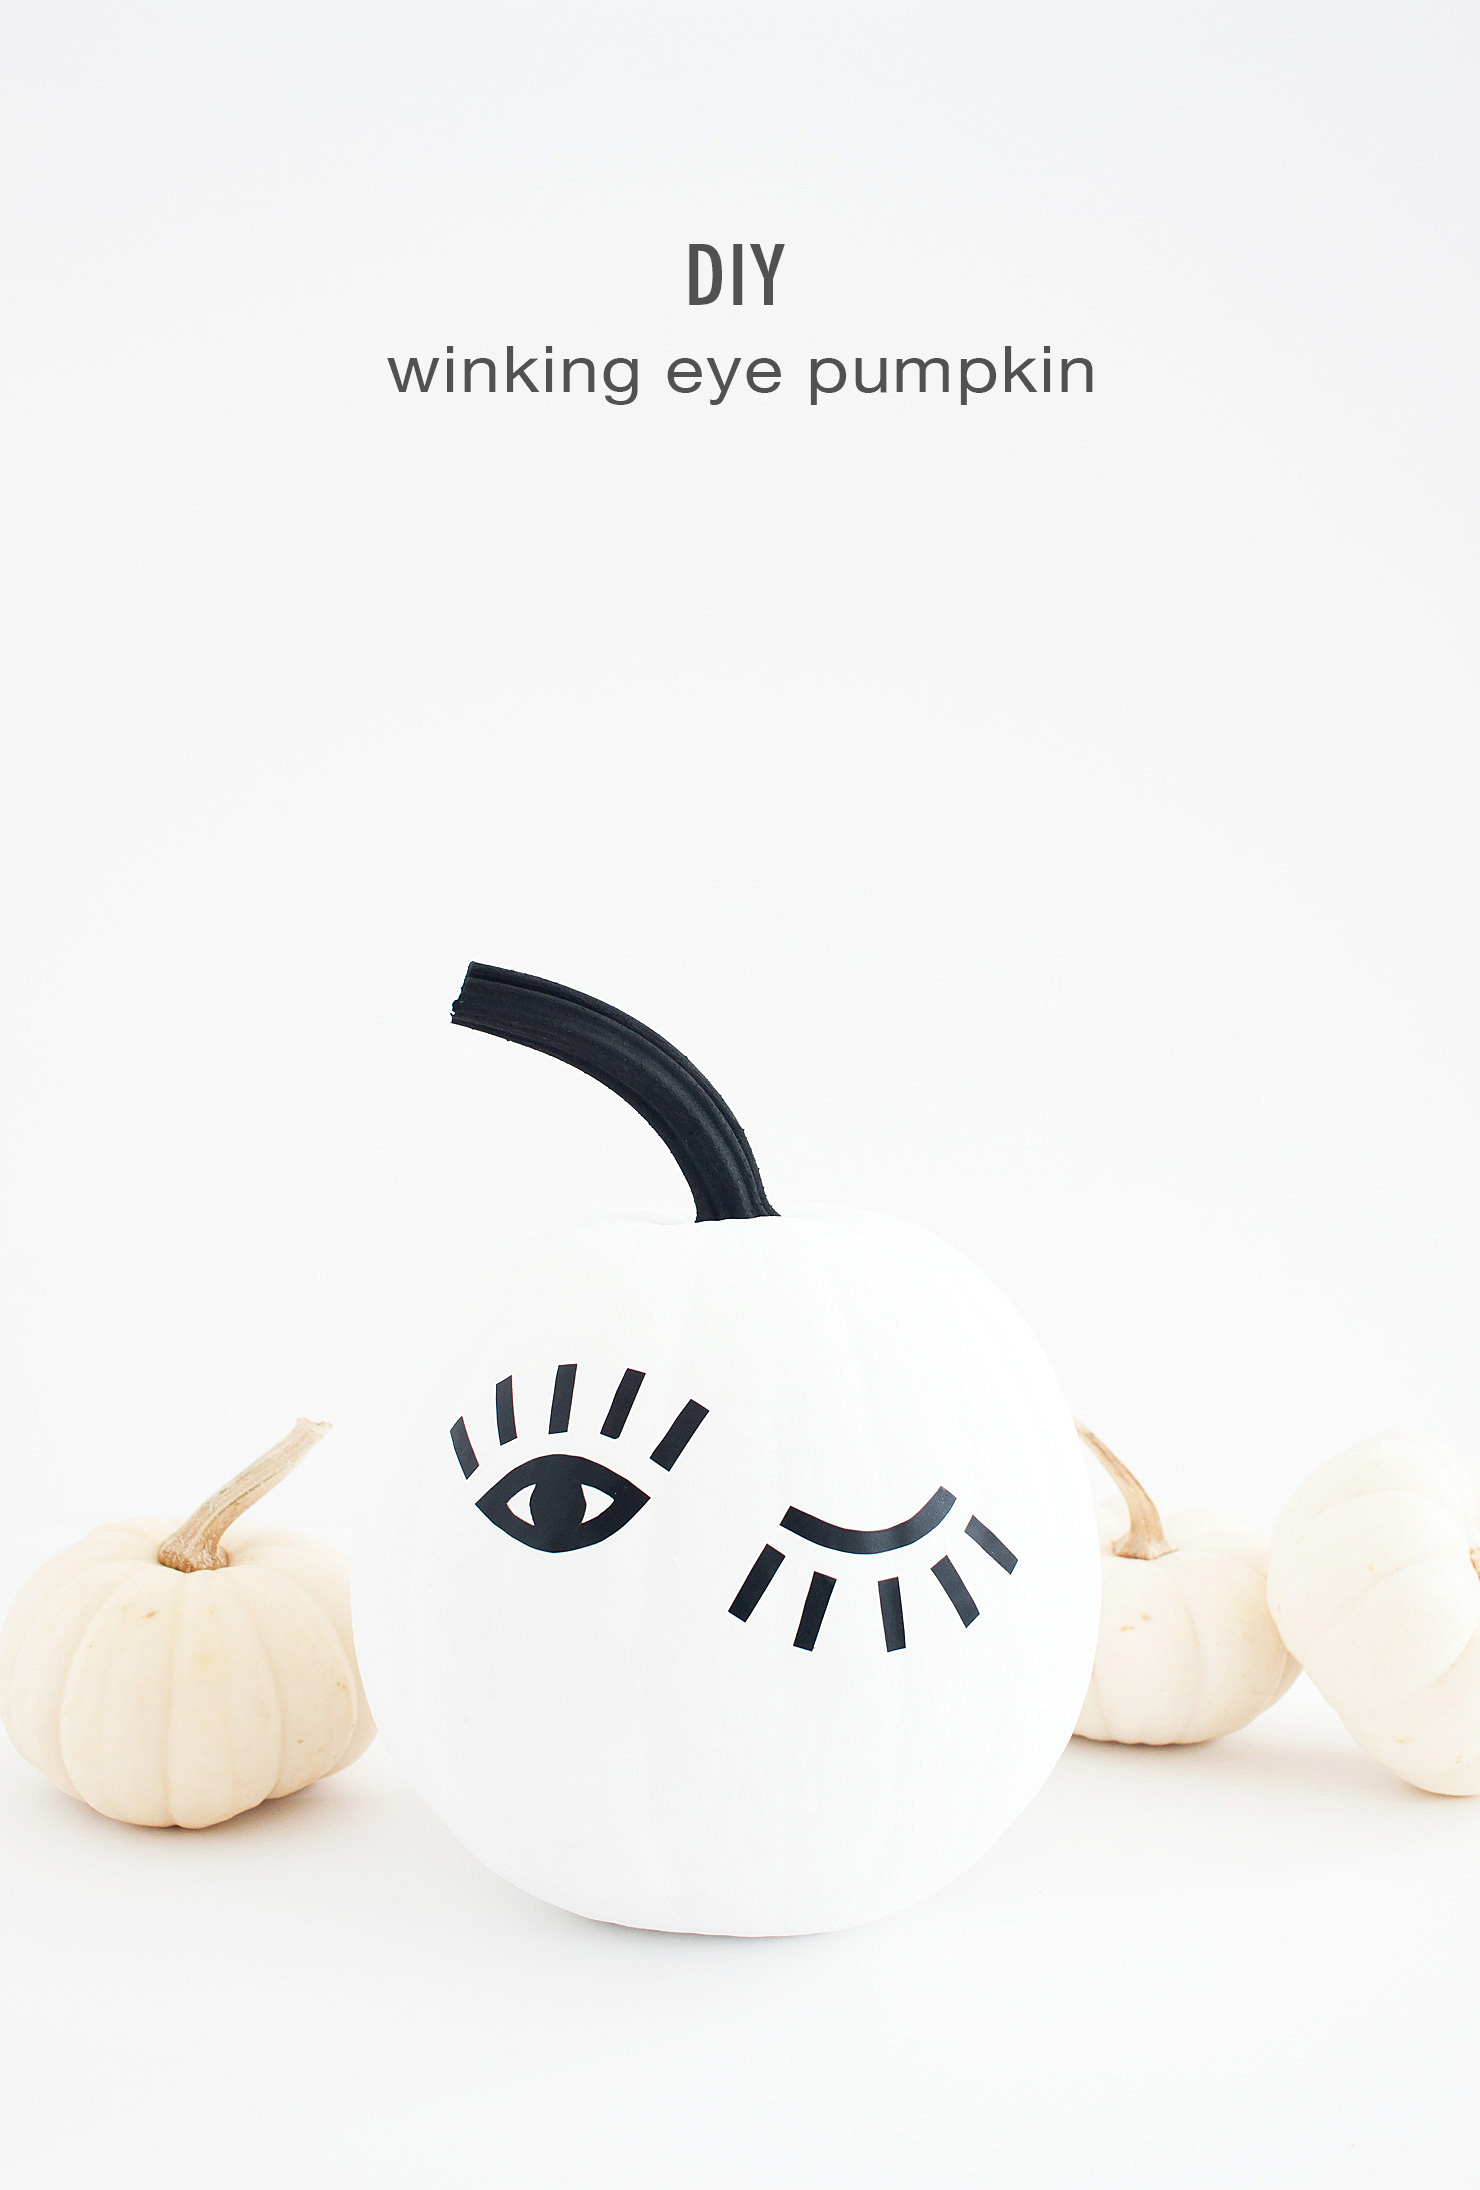 DIY winking eye pumpkin @idlehandsawake